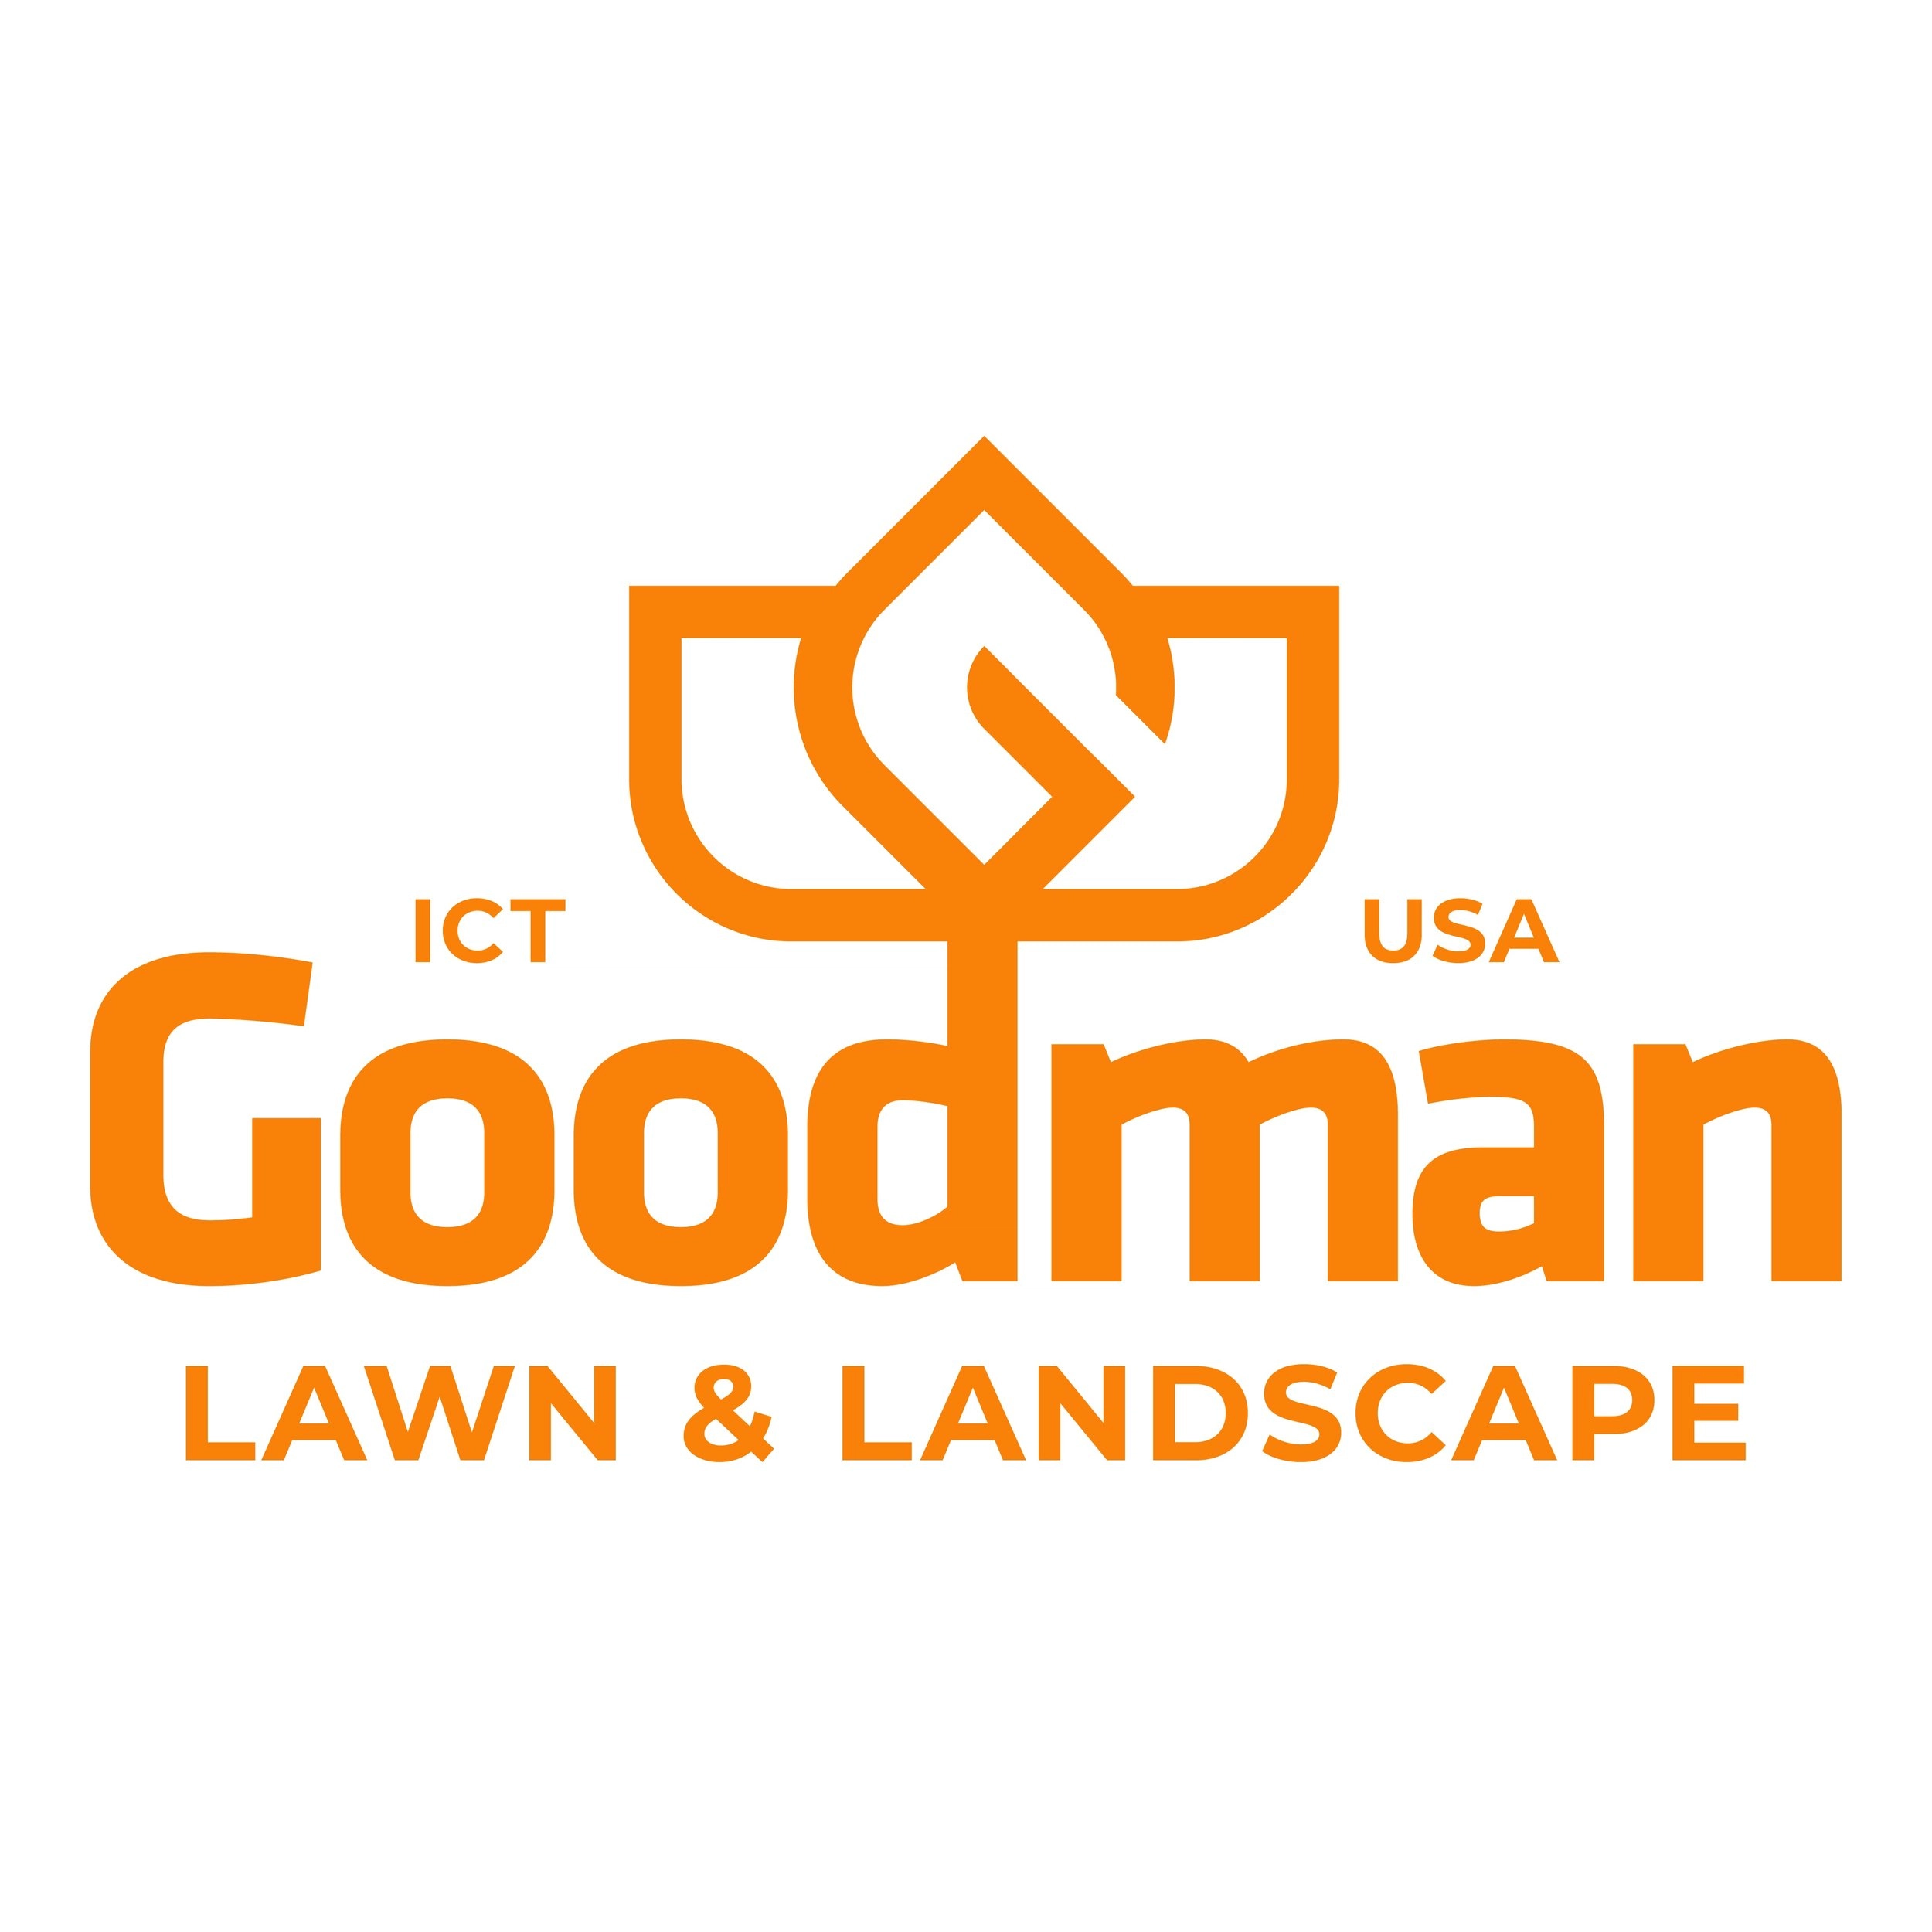 Goodman Lawn Care And Landscape - Wichita Lawn Service Logo